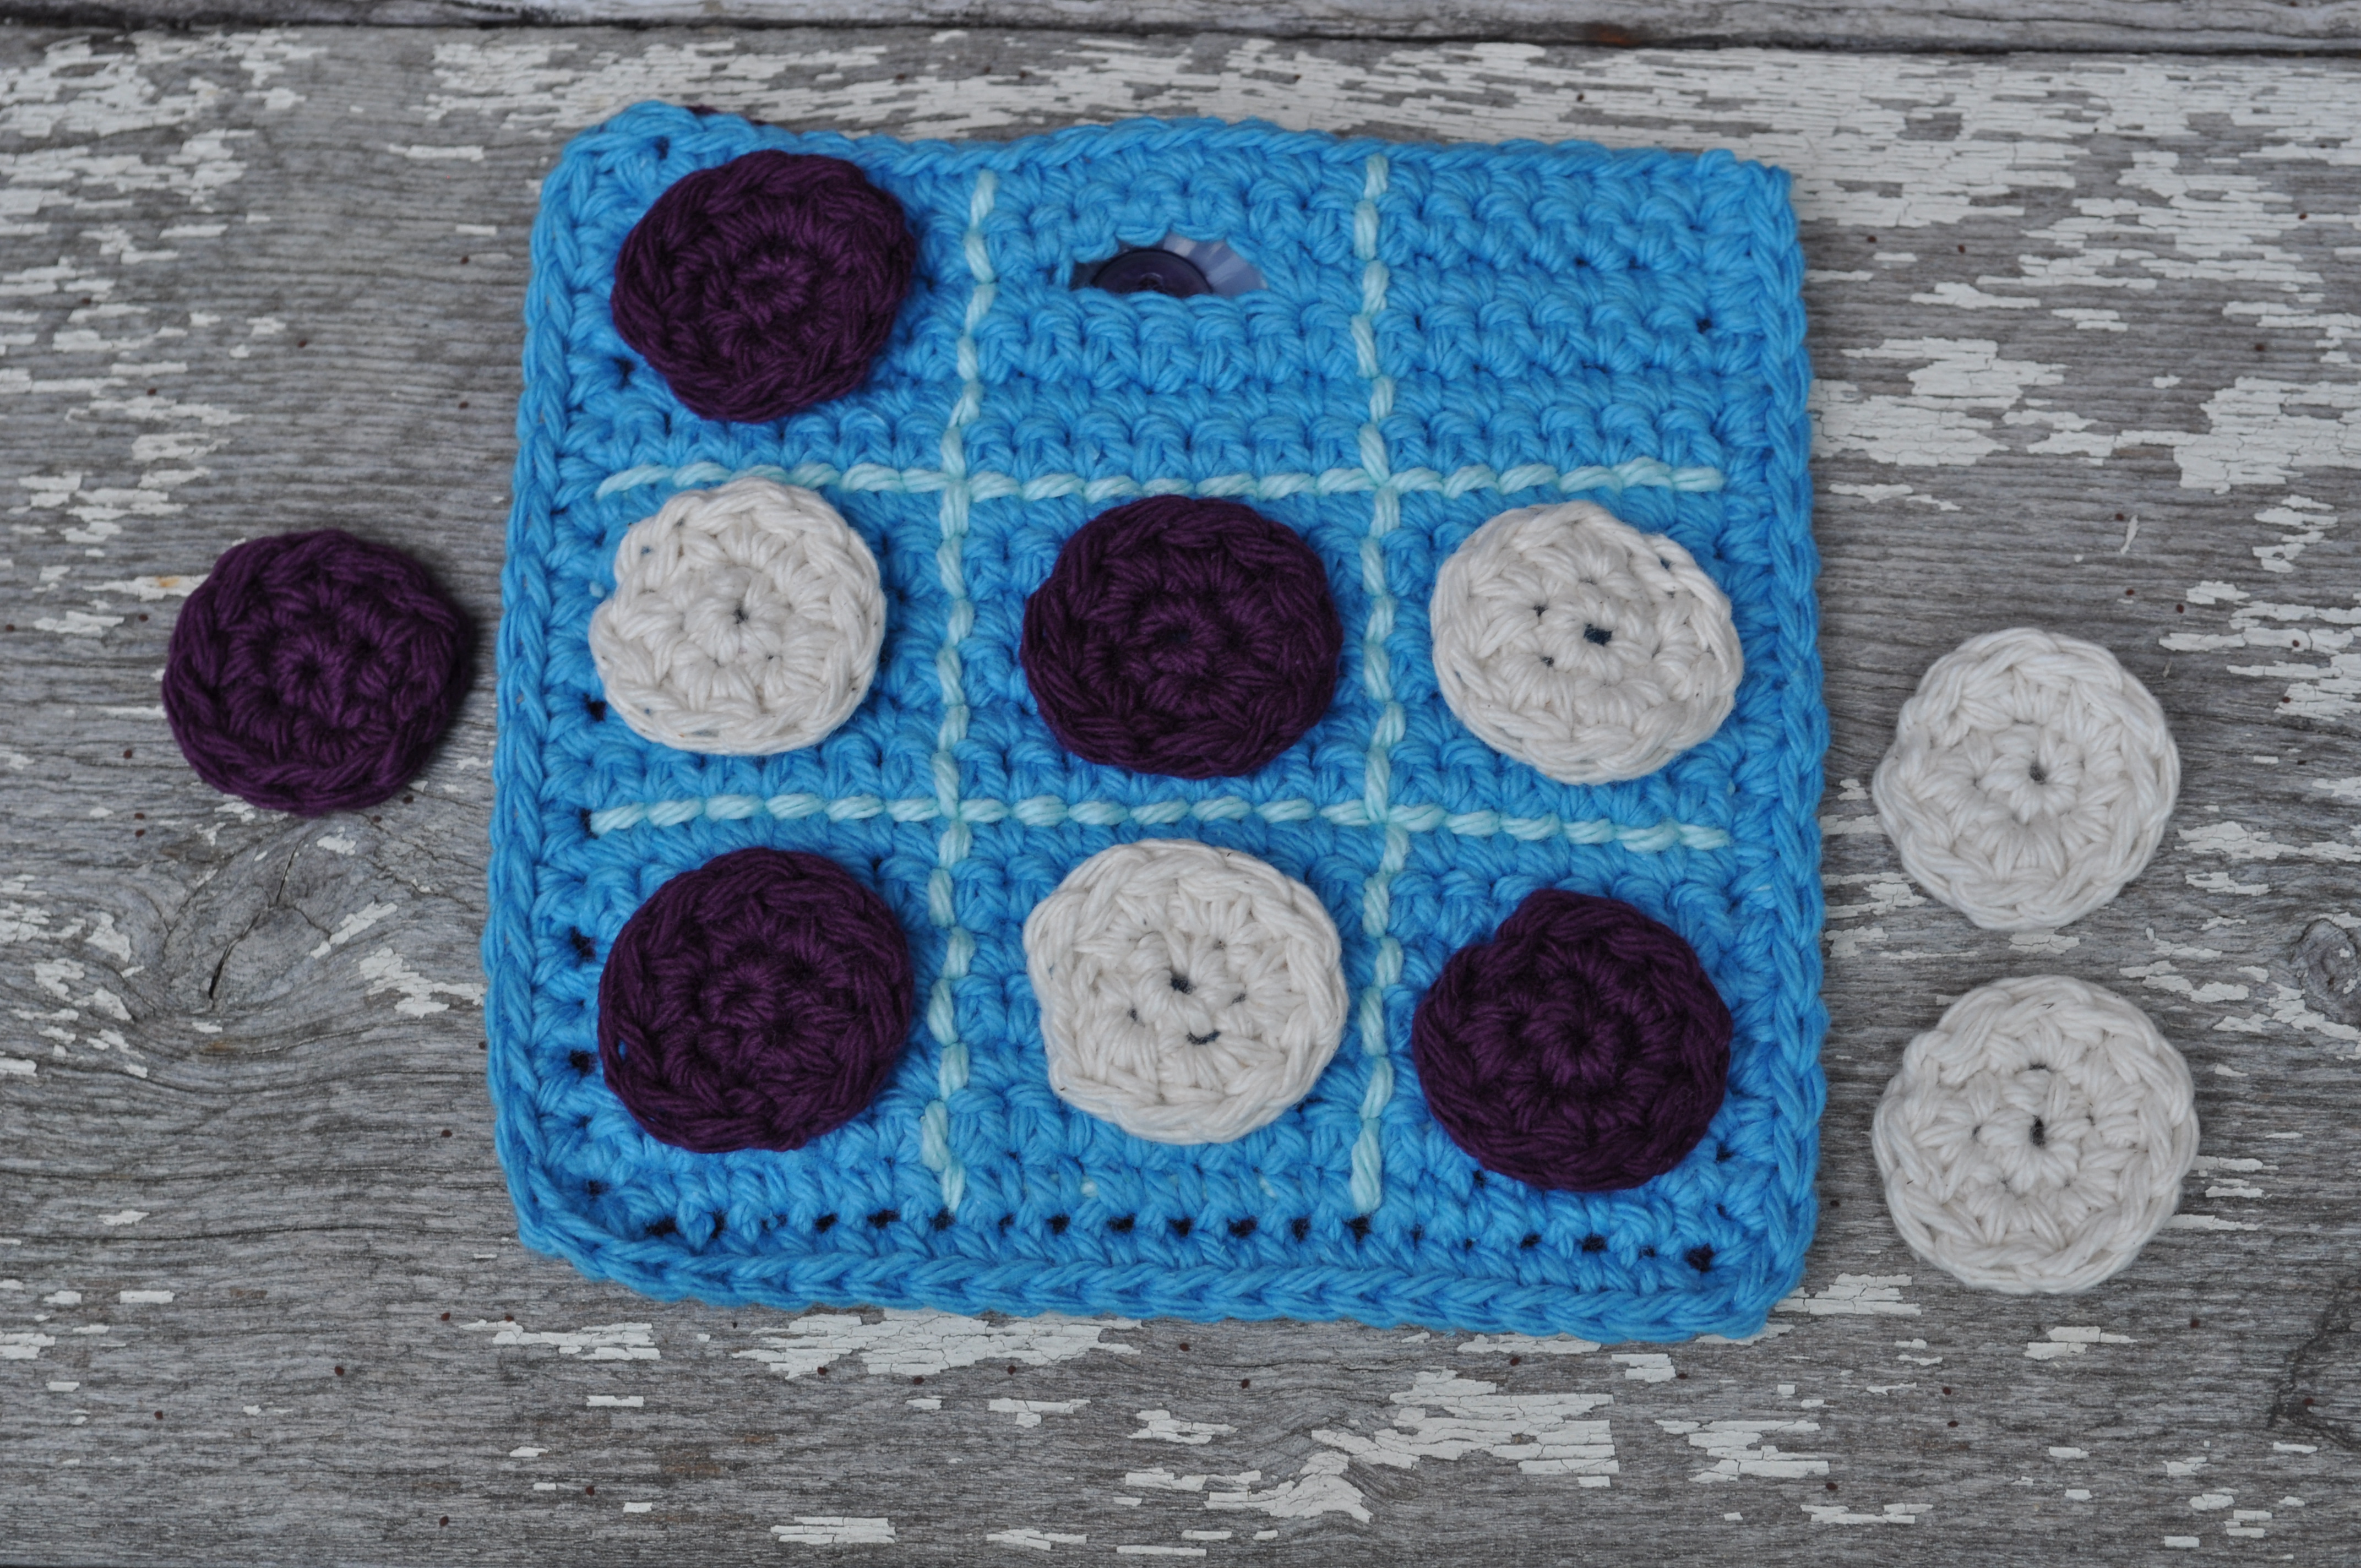 Video: Crochet Patterns | eHow.com